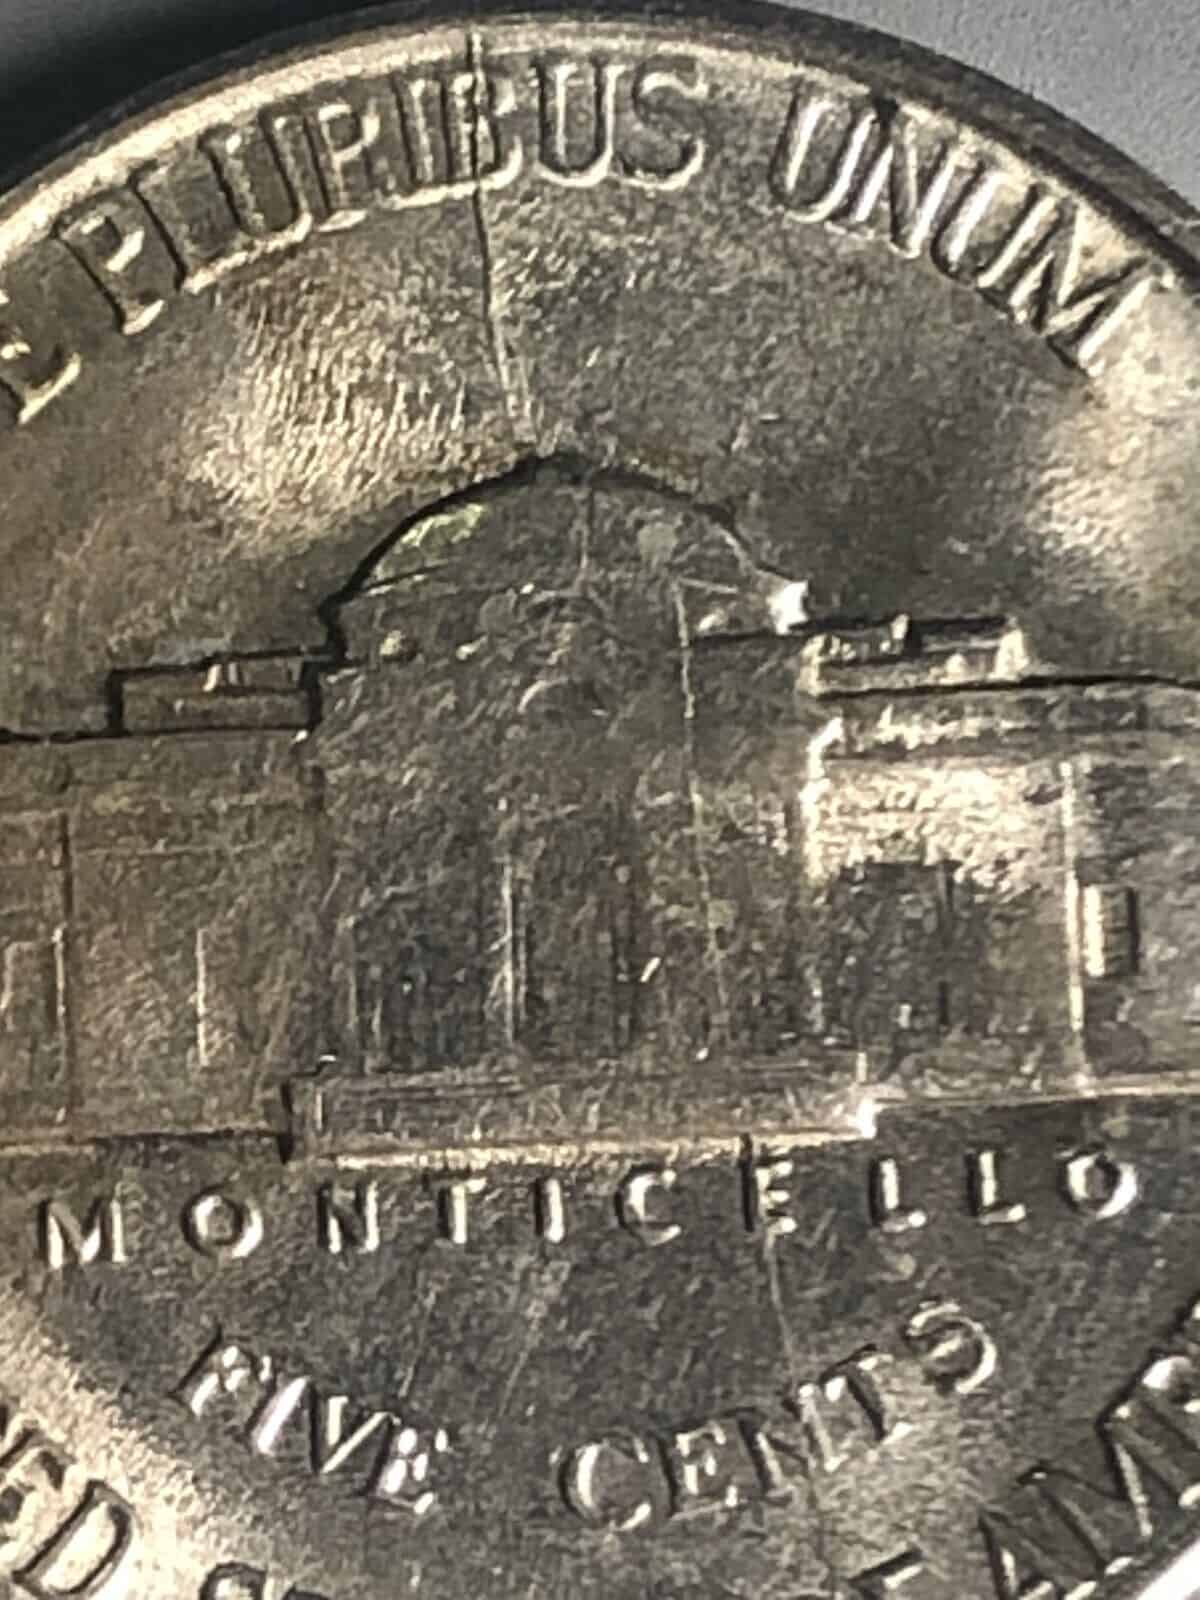 1940 Nickel with cracks